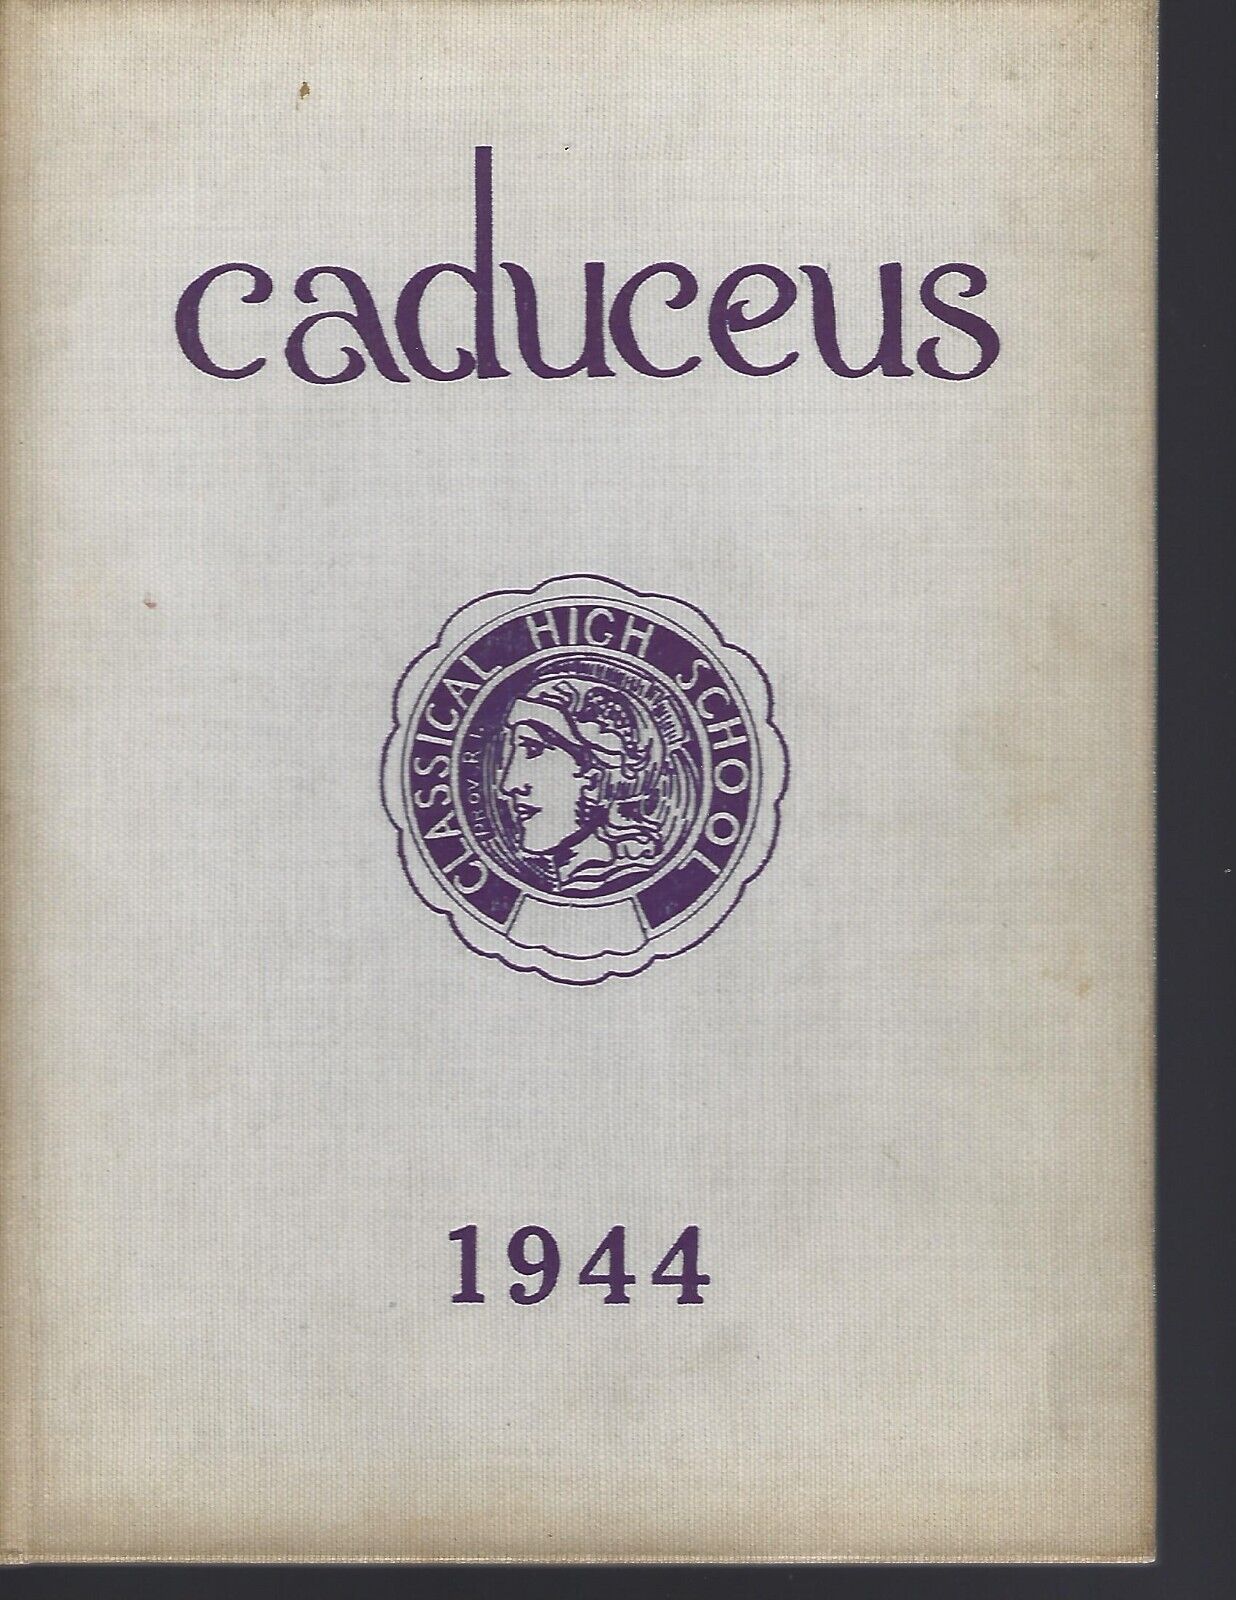 1944 CLASSICAL HIGH SCHOOL YEARBOOK, CADUCEUS, PROVIDENCE RHODE ISLAND-VERY GOOD